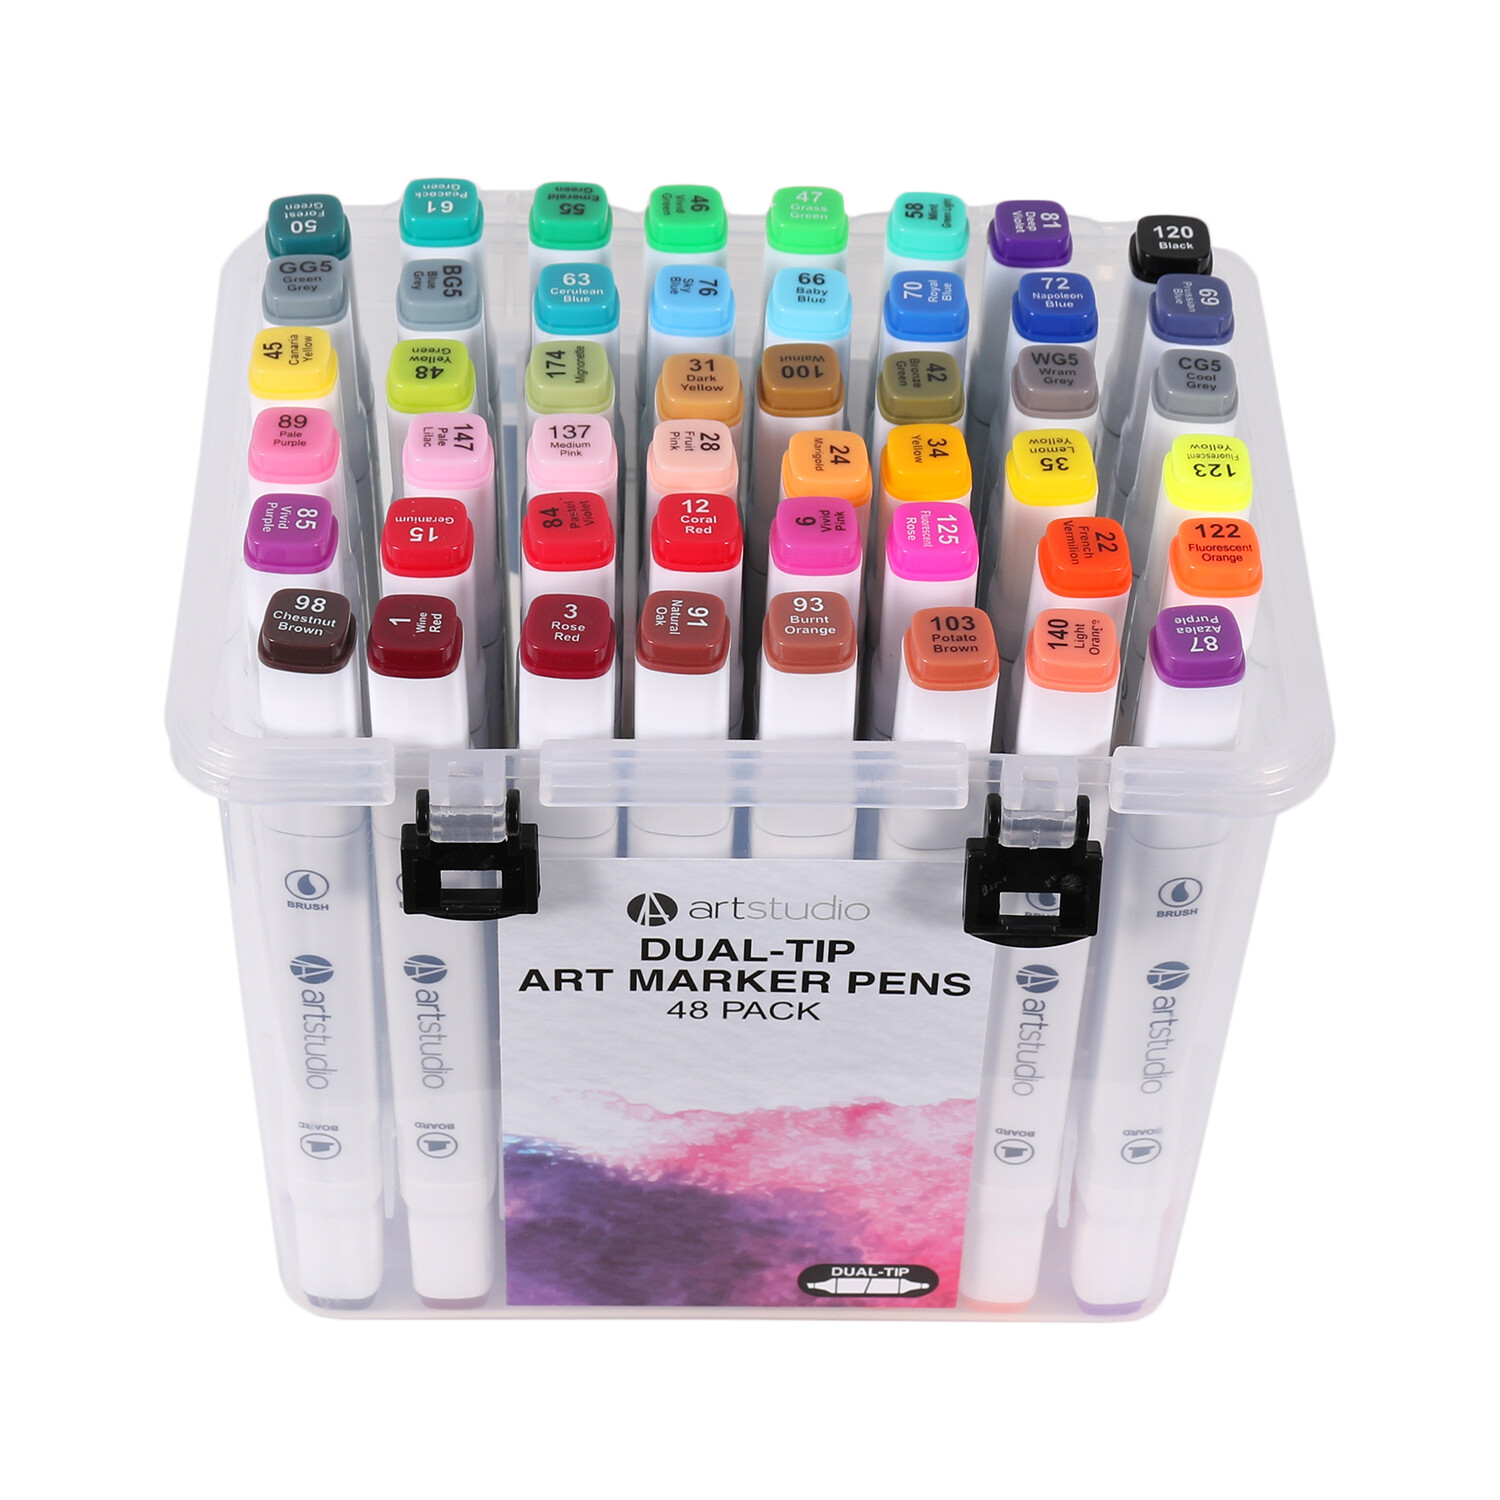 Art Studio Dual Tip Art Marker Pens 48 Pack Image 2